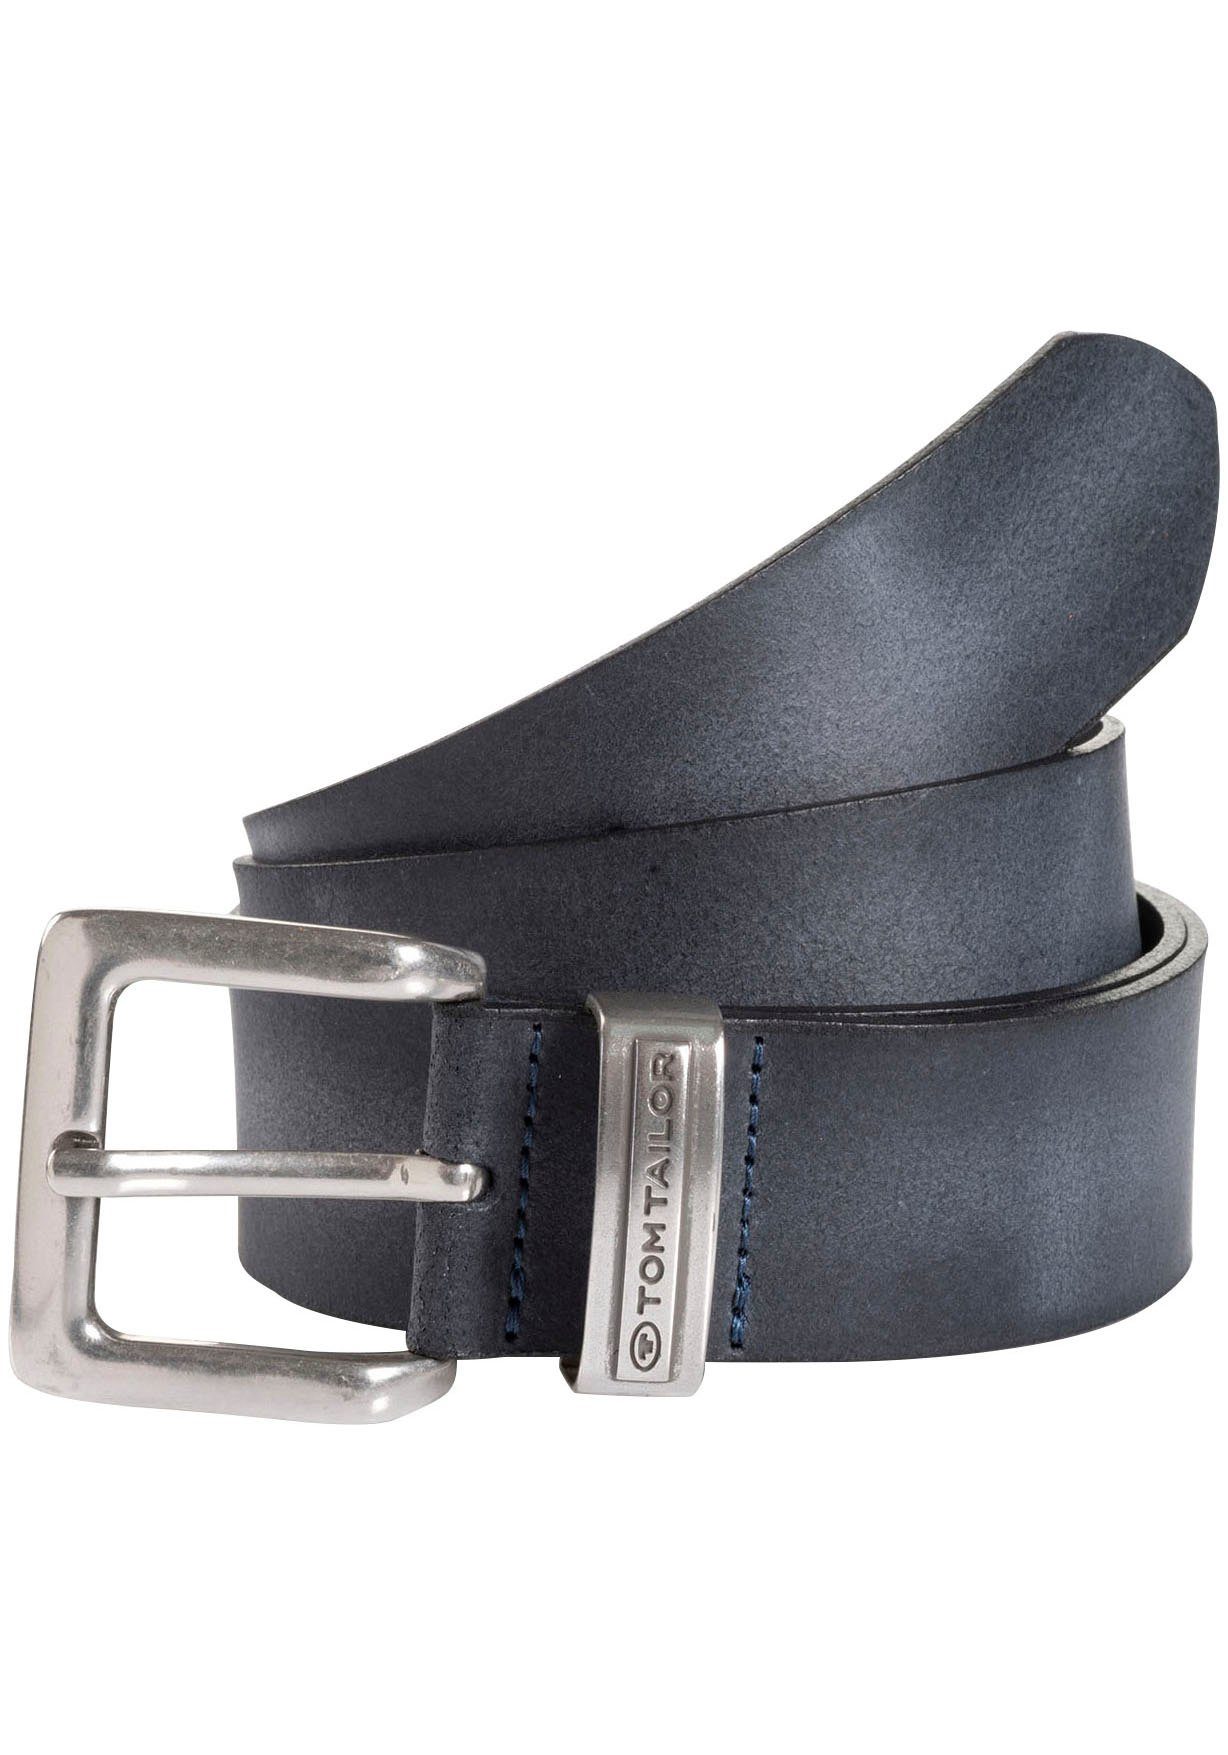 TOM TAILOR Vintage-Look, im silberfarben Schließe blau Ledergürtel TTHARRY Jeansgürtel